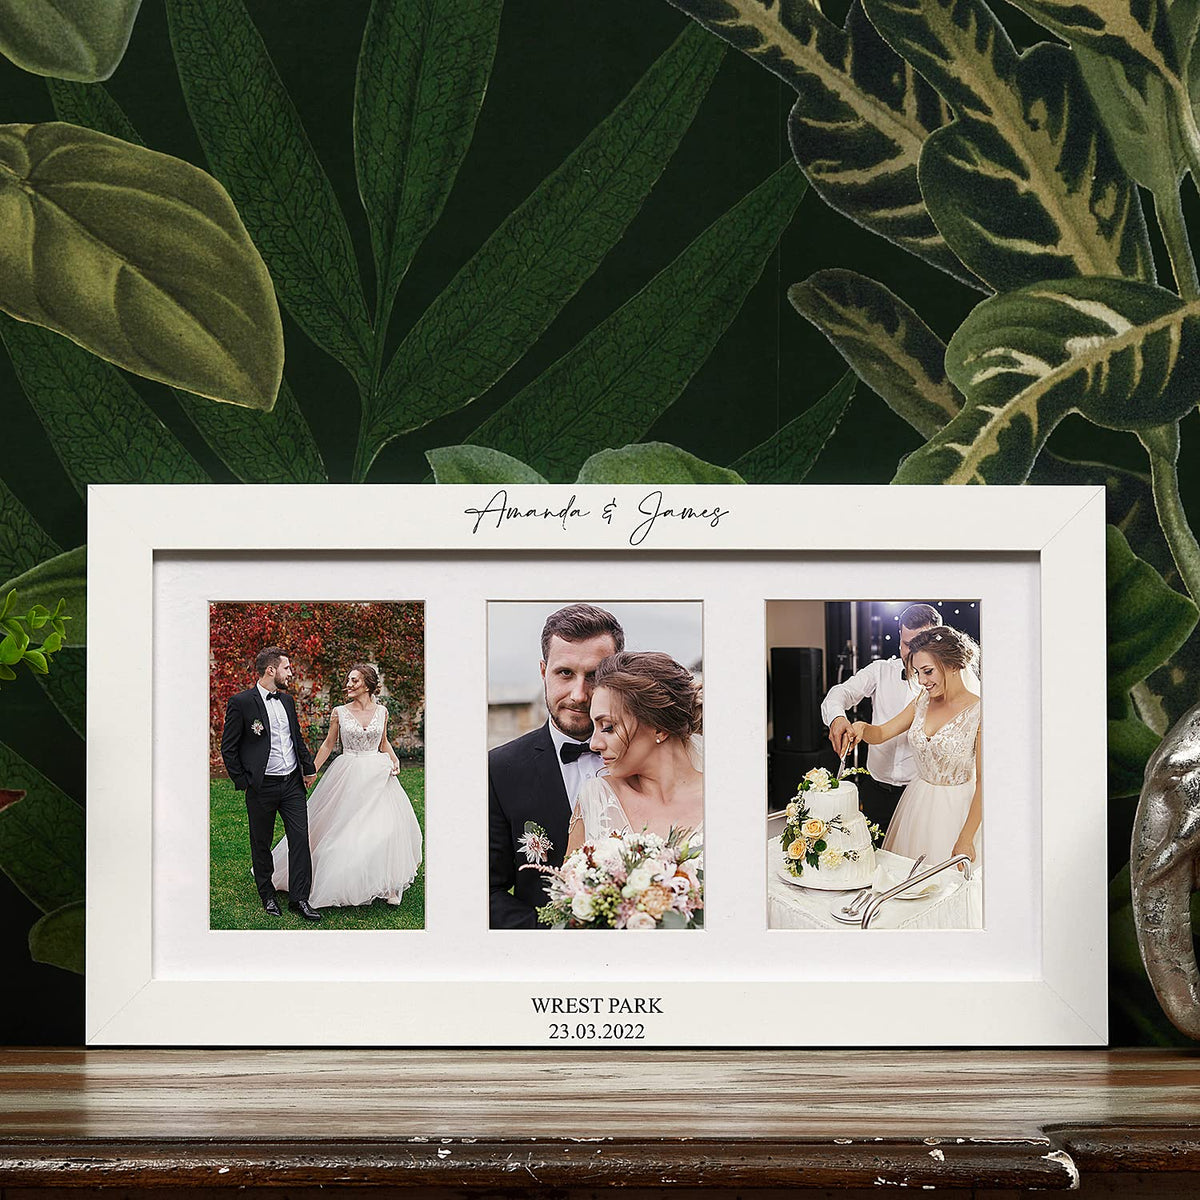 Personalised White Wooden Wedding Triple Photo 6 x 4 Frame Gift